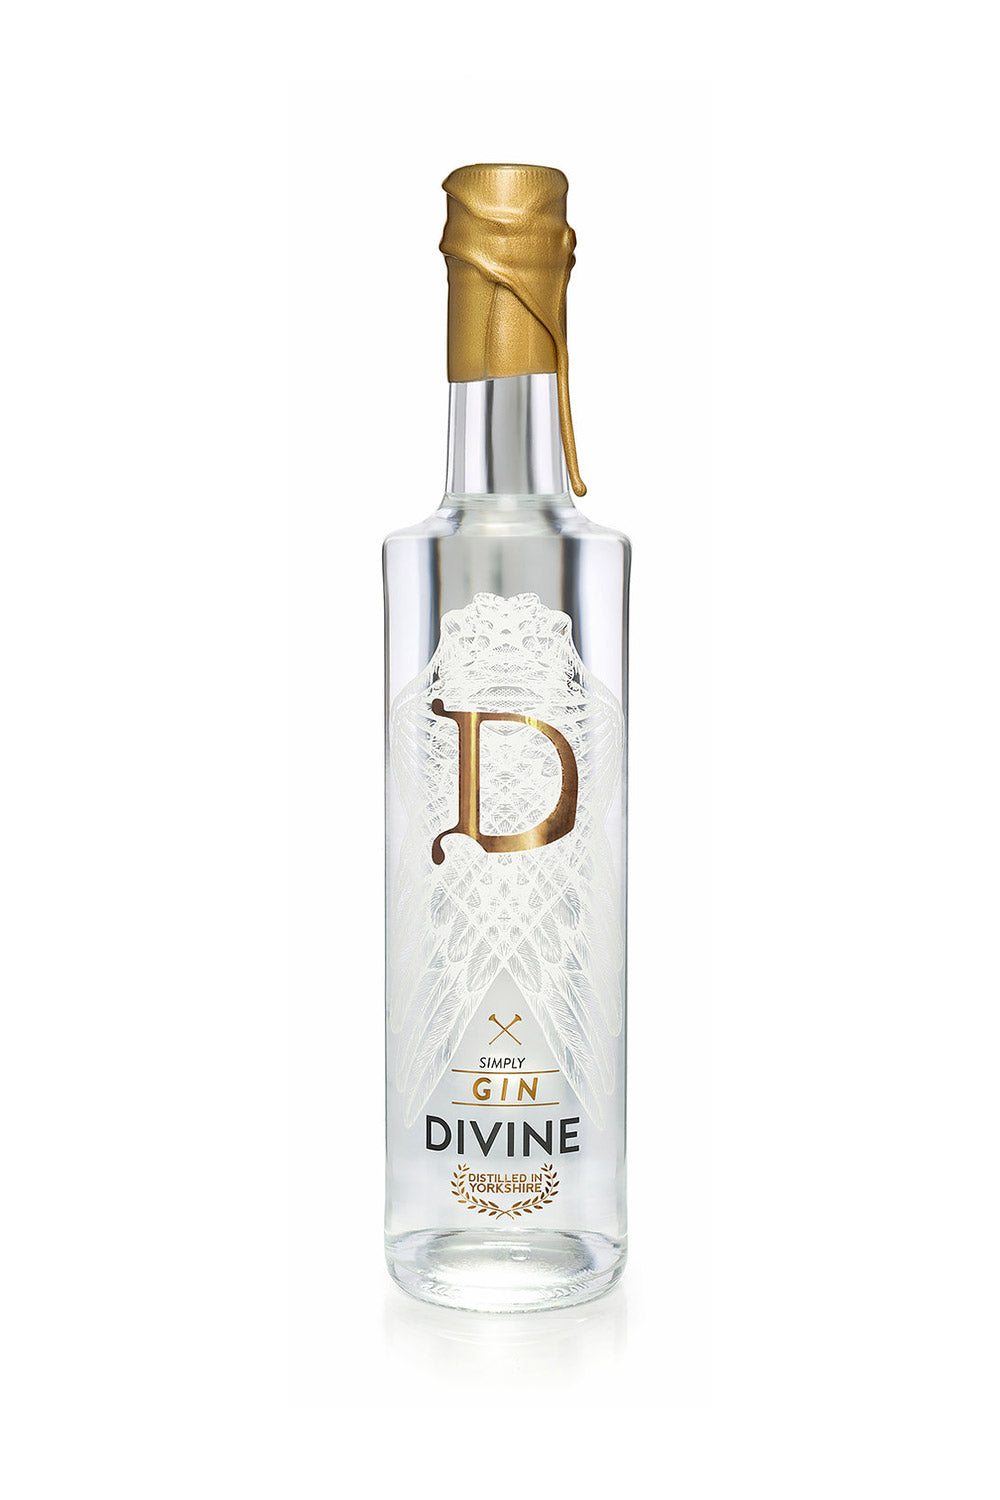 Divine London Dry Gin